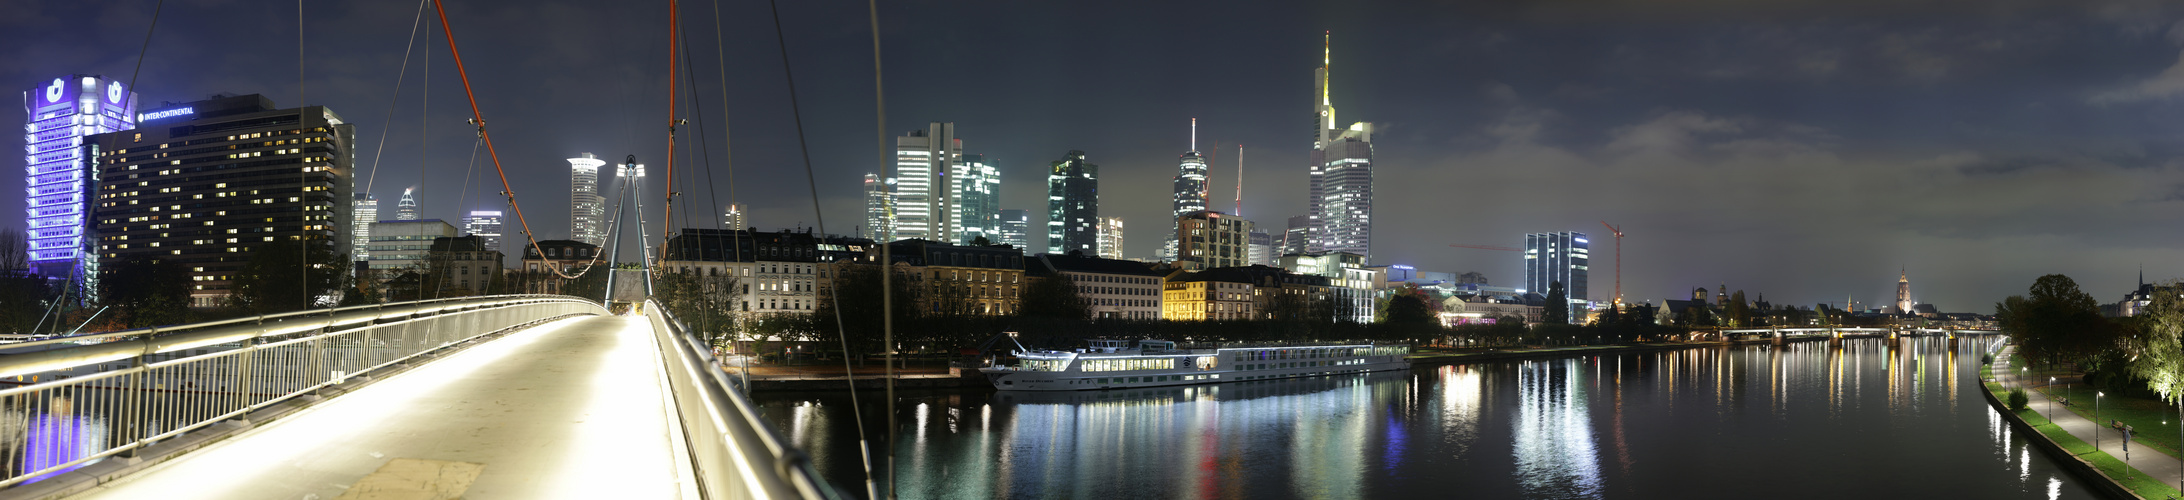 Frankfurt Mainpanorama